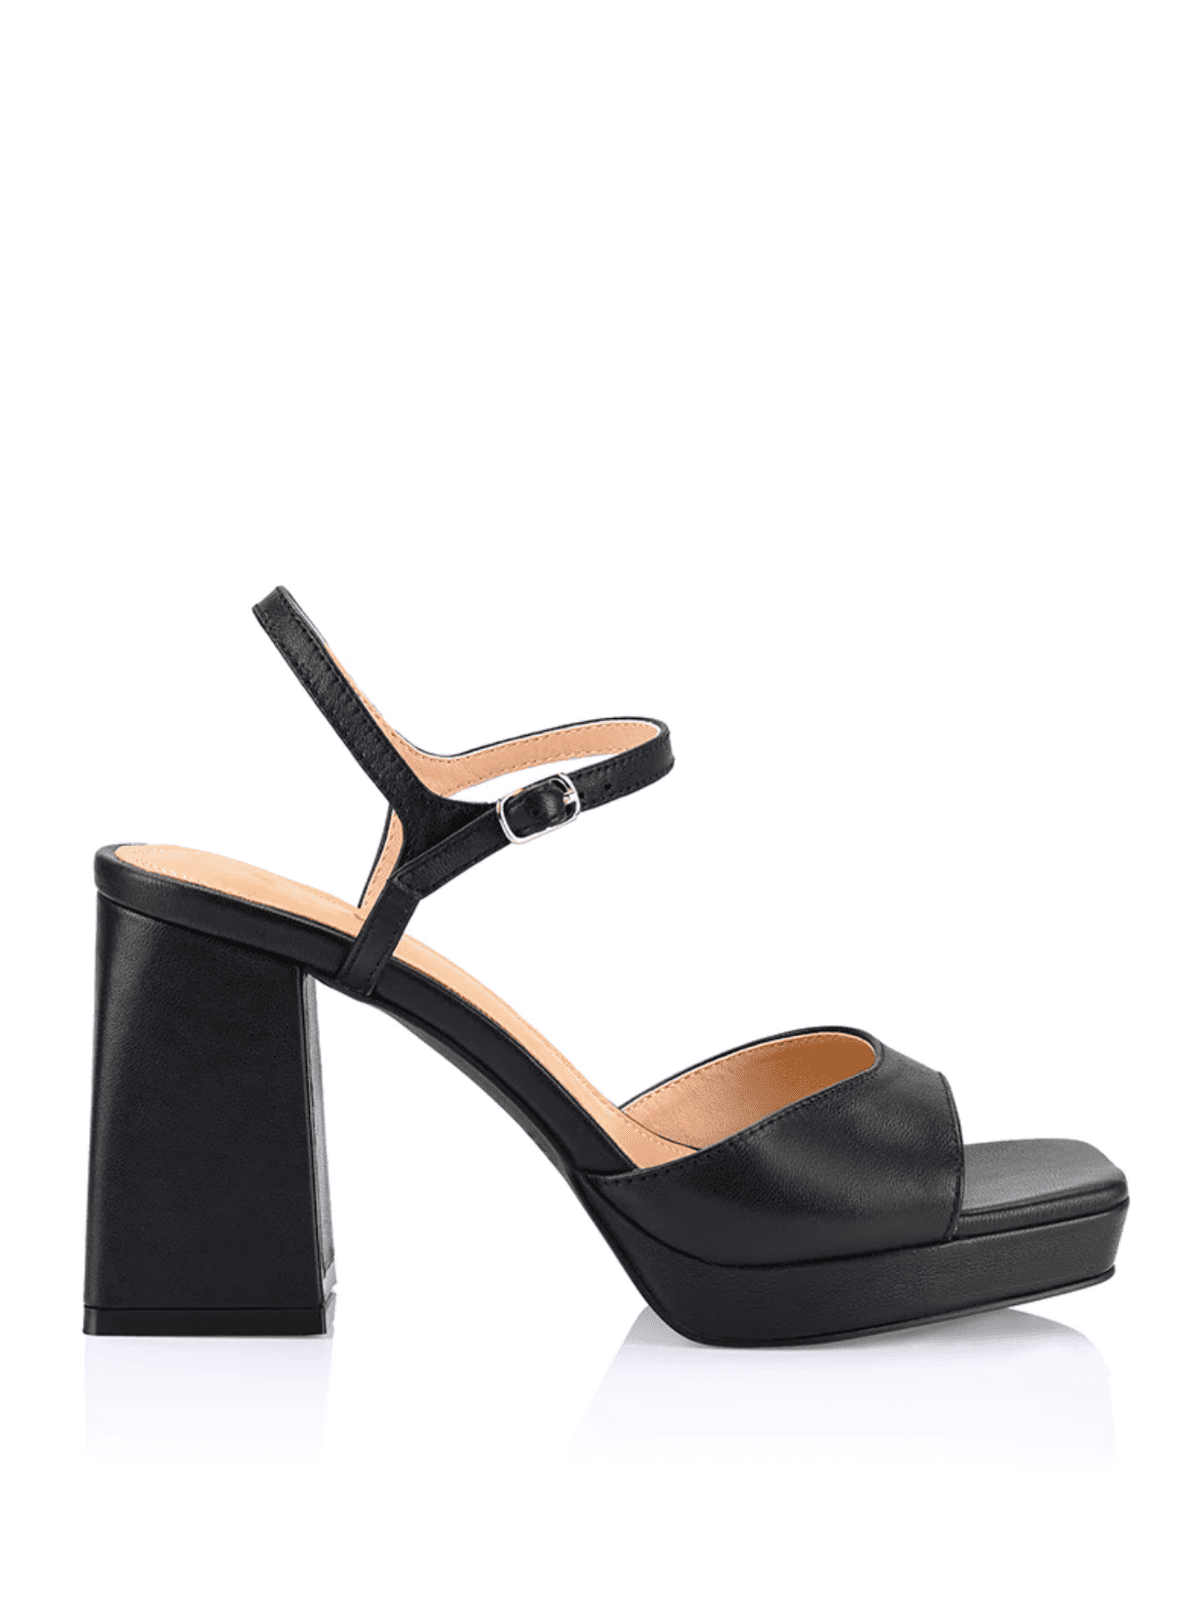 Martinez Platform Heels - Black Leather